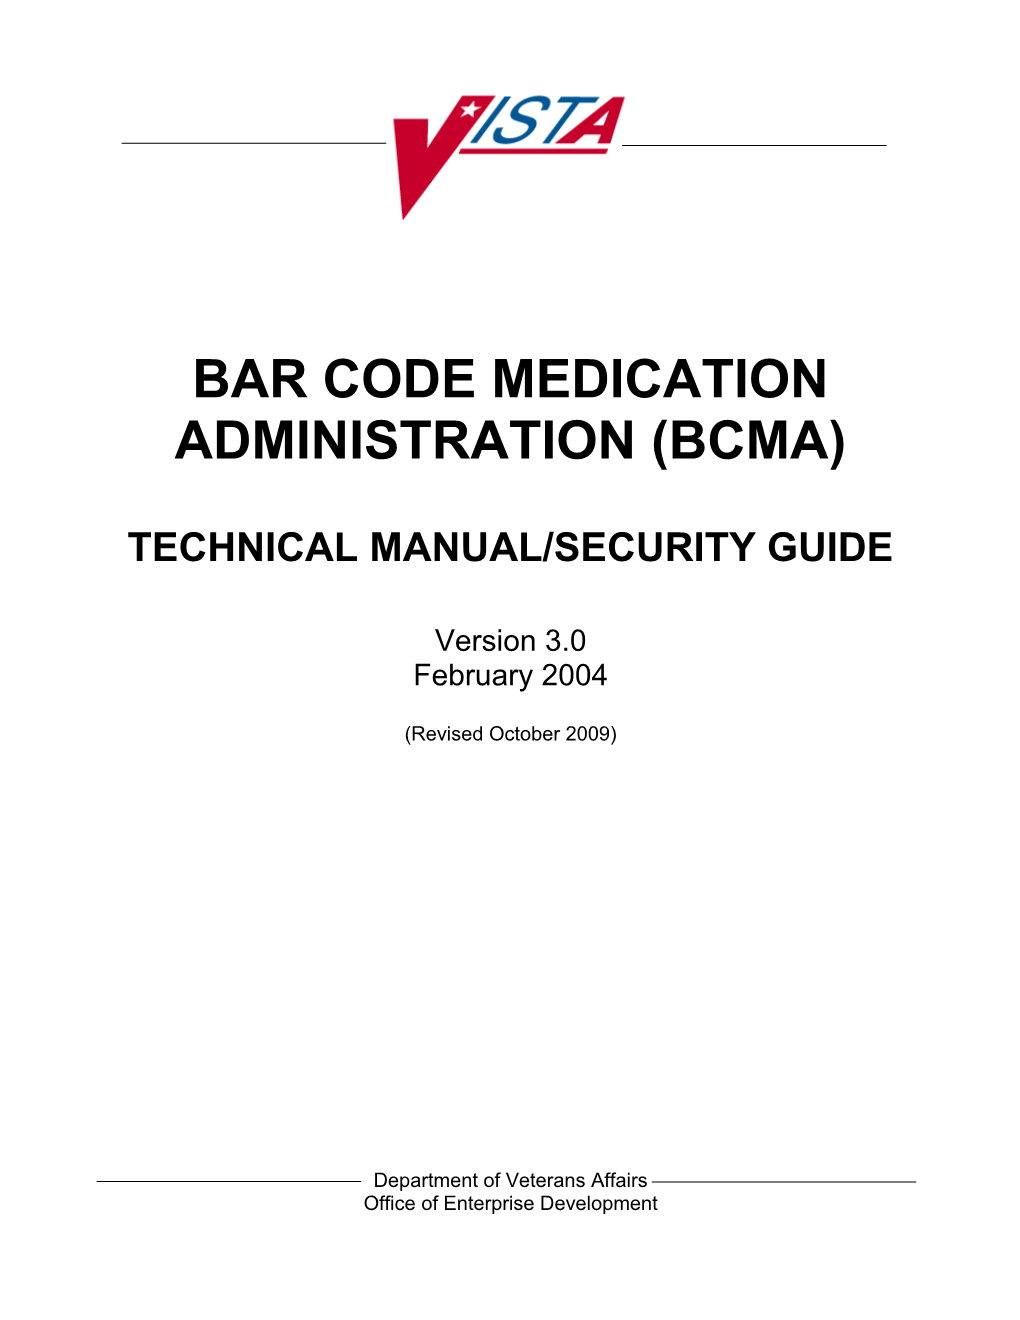 BCMA Technical Manual